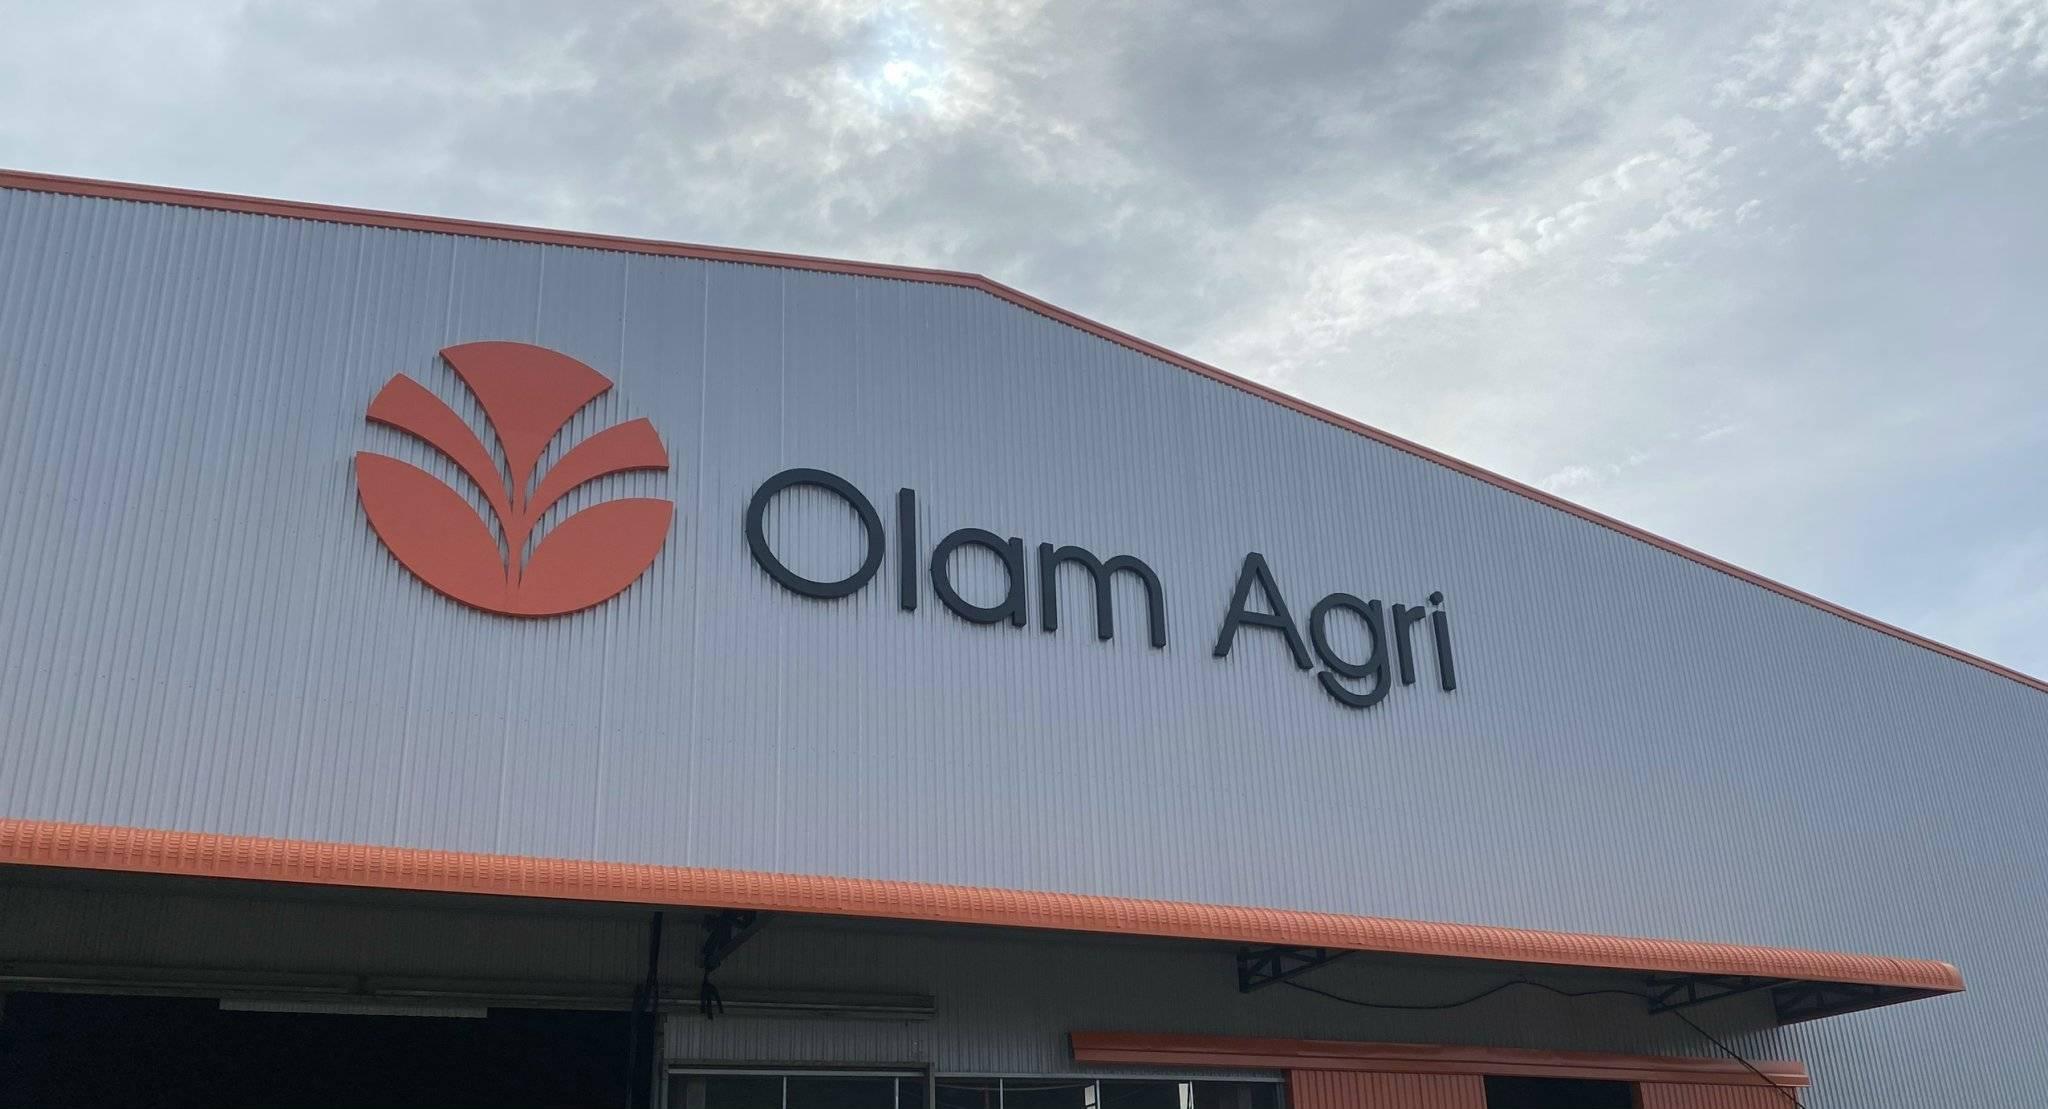 Olam Global Agri Việt Nam